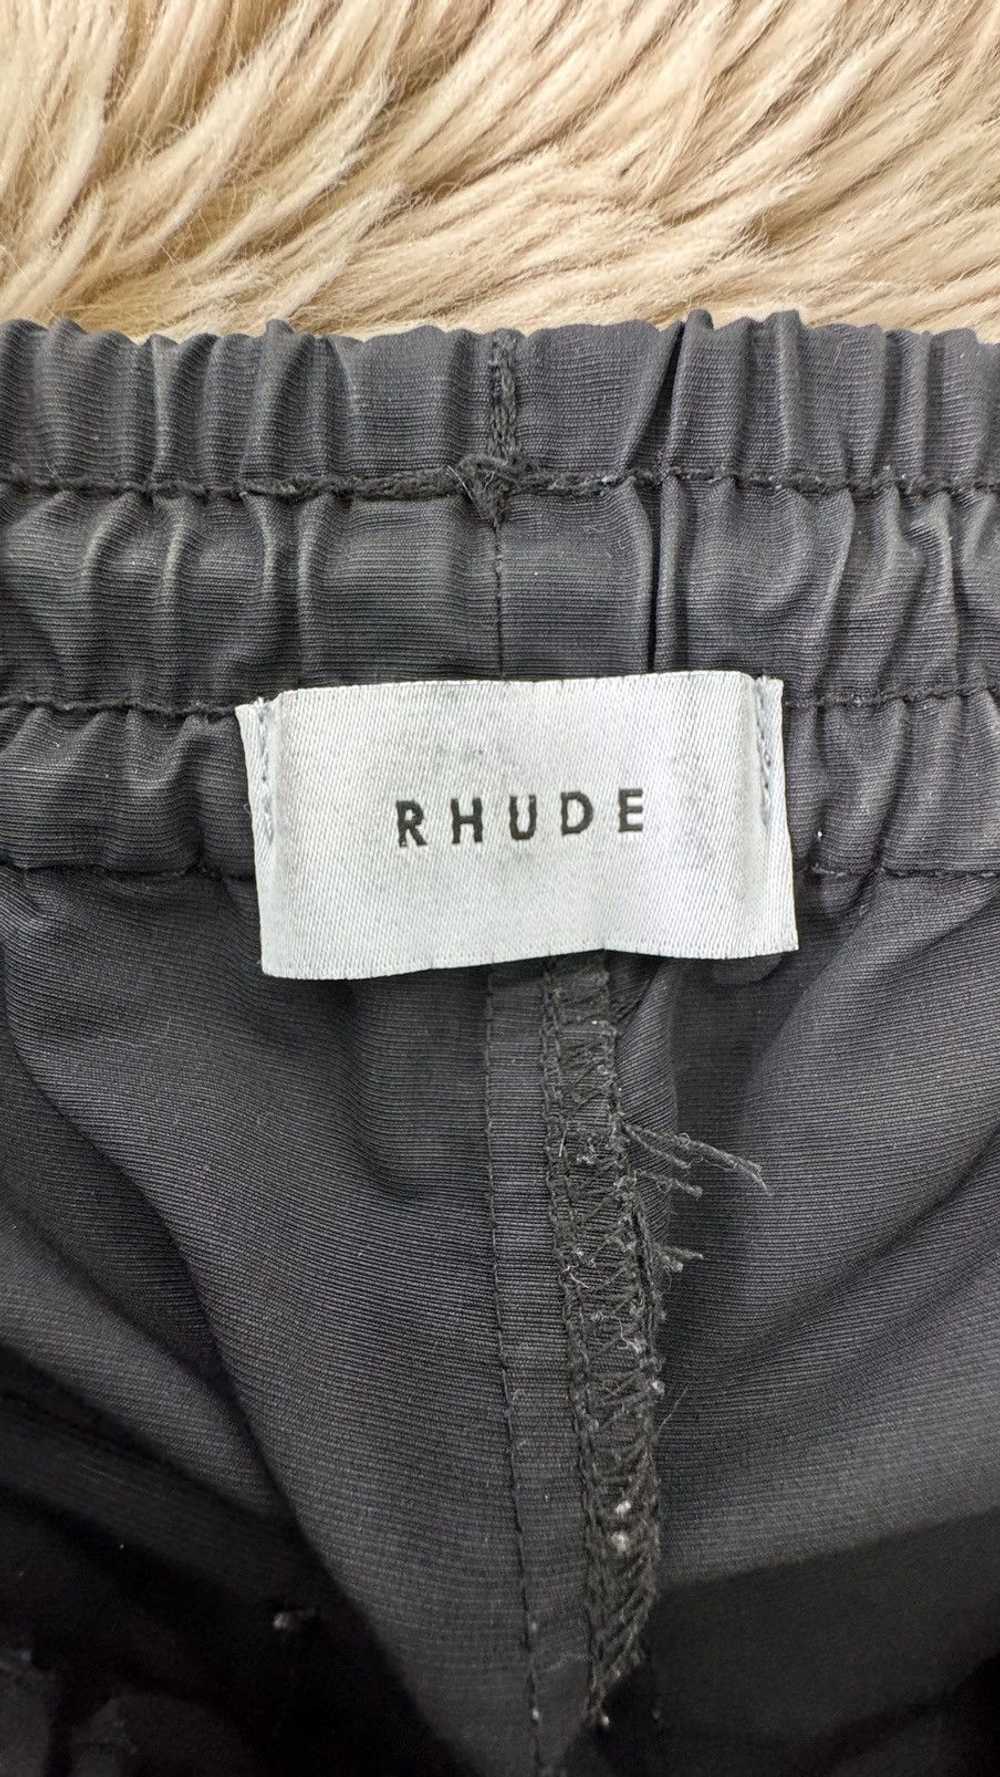 Rhude Black Classic Cargo Pants - image 5